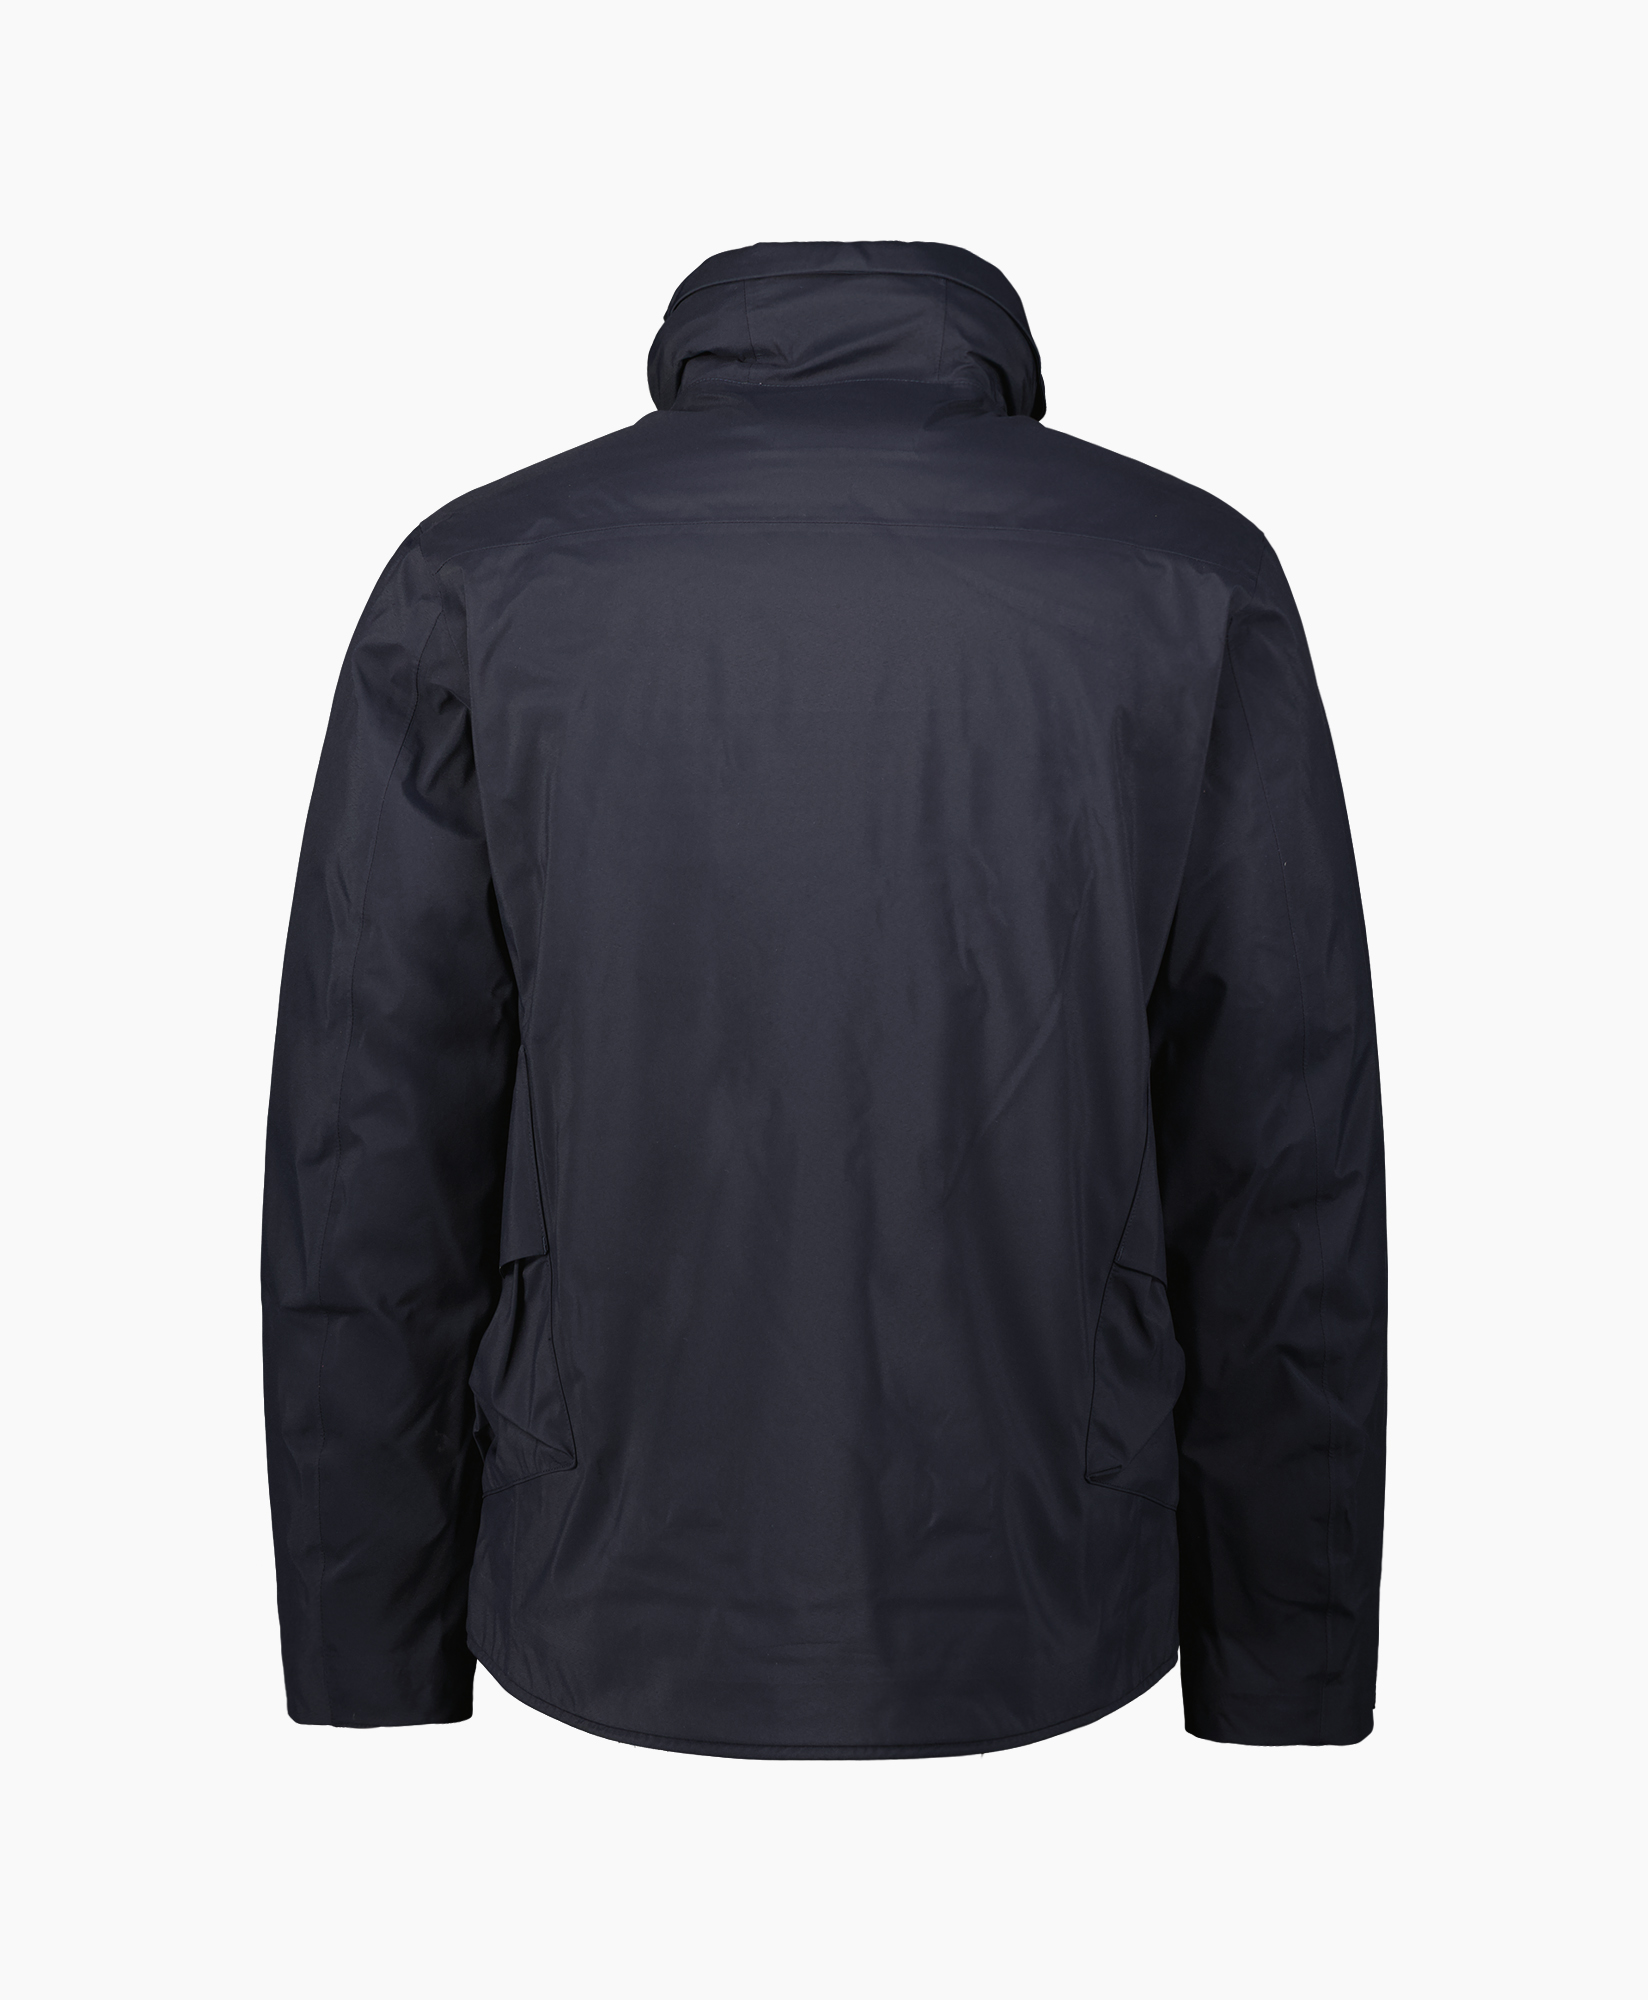 Jack Outerwear - Medium Jacket Blauw